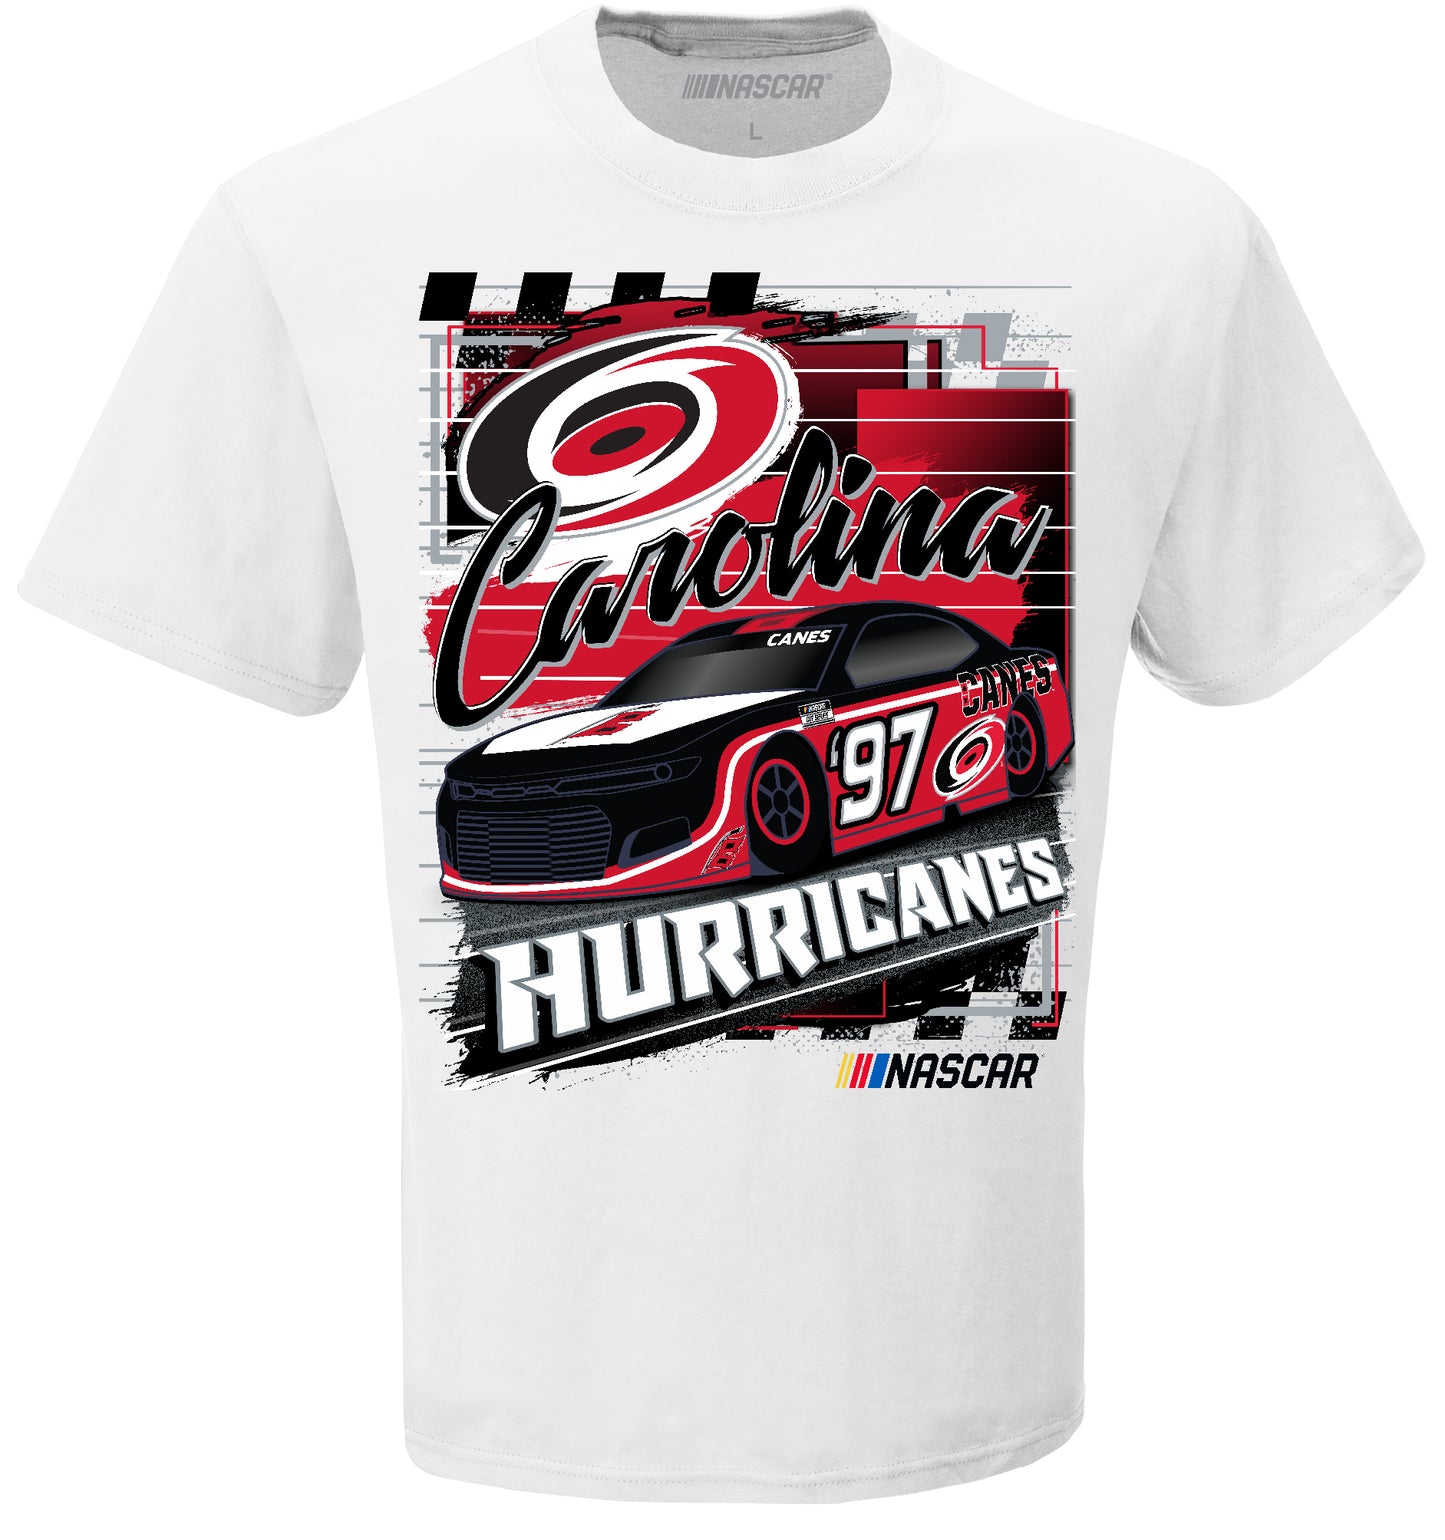 Checkered Flag NASCAR Shirt 24